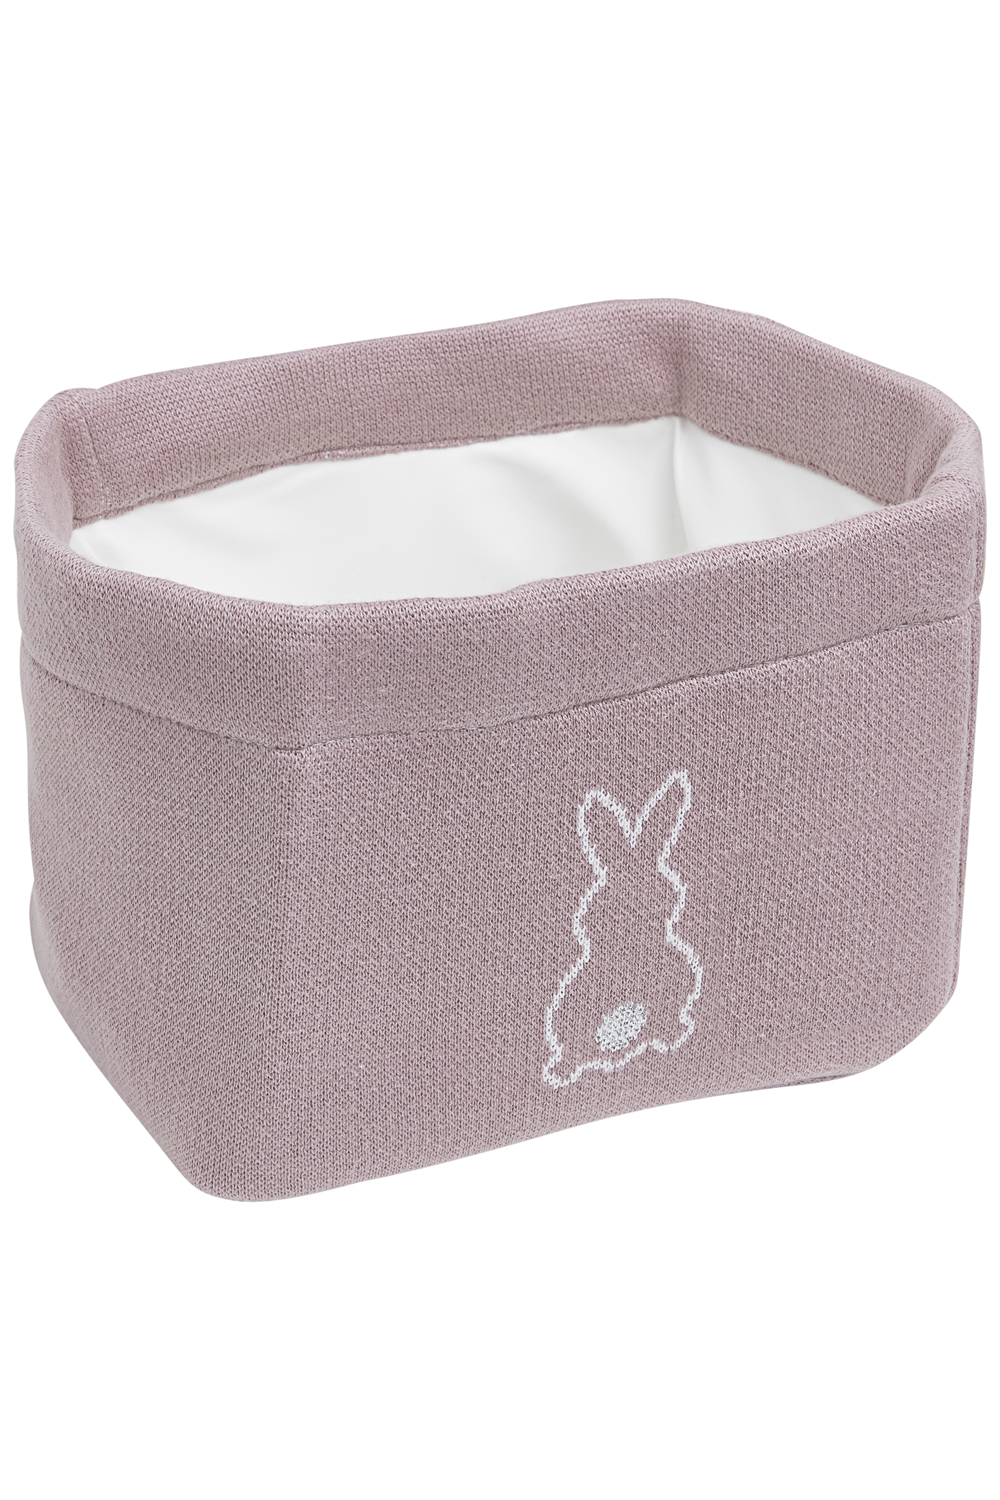 Nursery basket Rabbit - lilac - Small